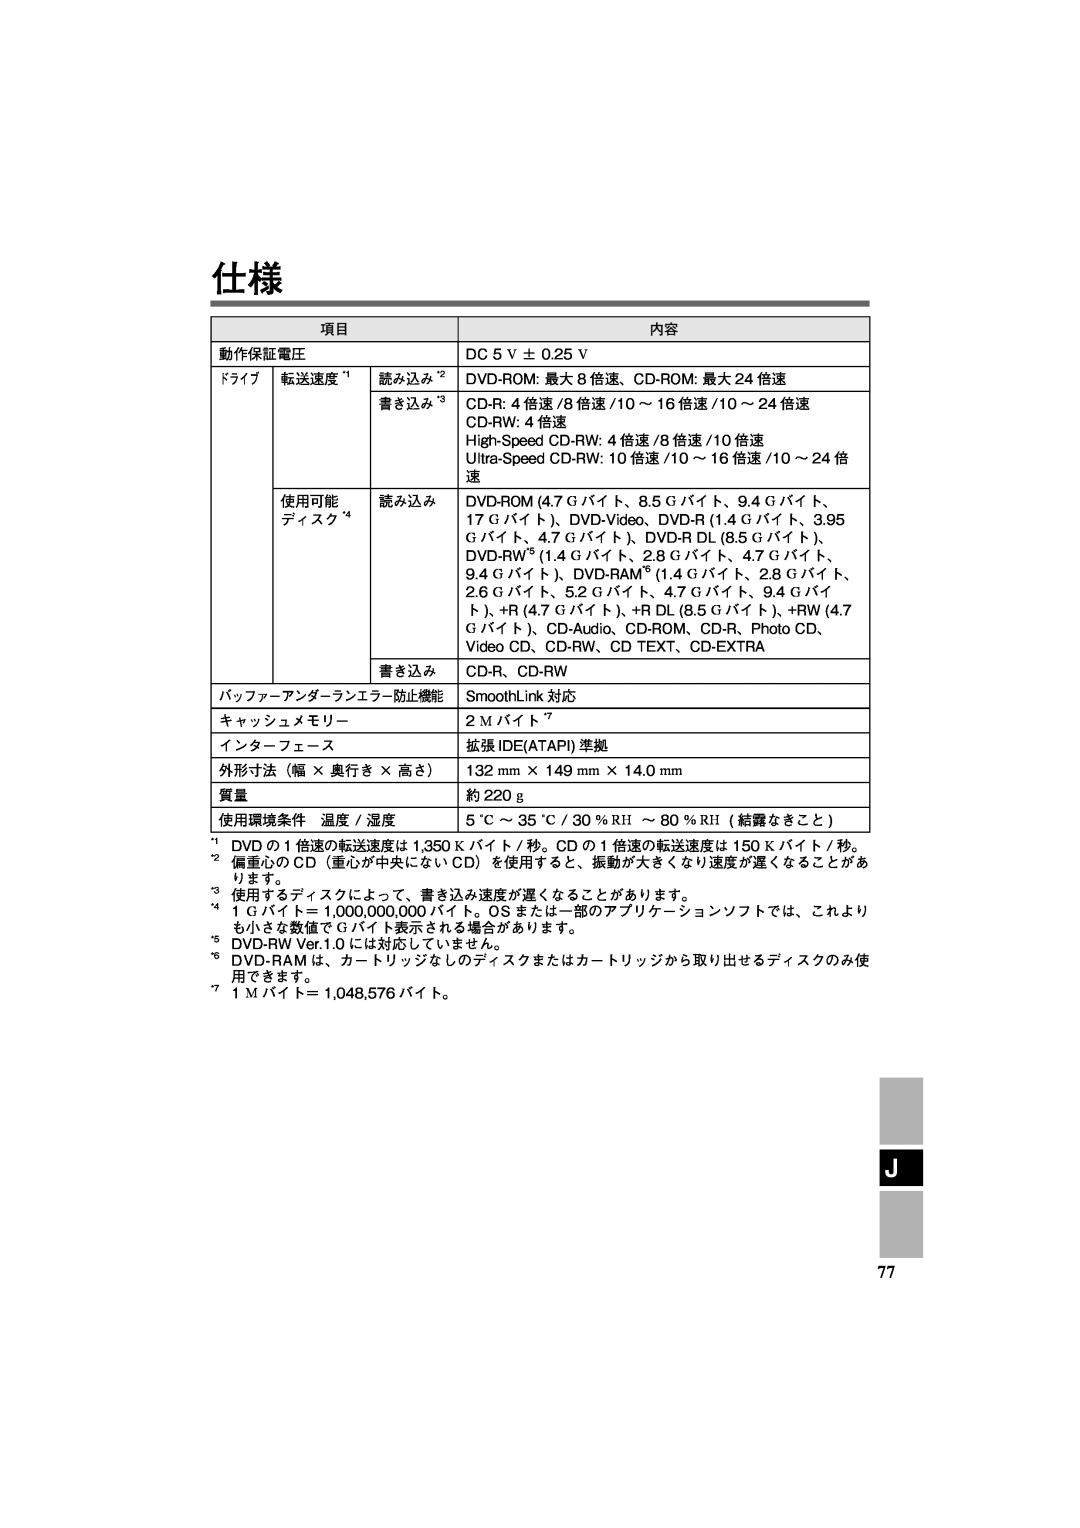 Panasonic CF-VDR301U specifications 